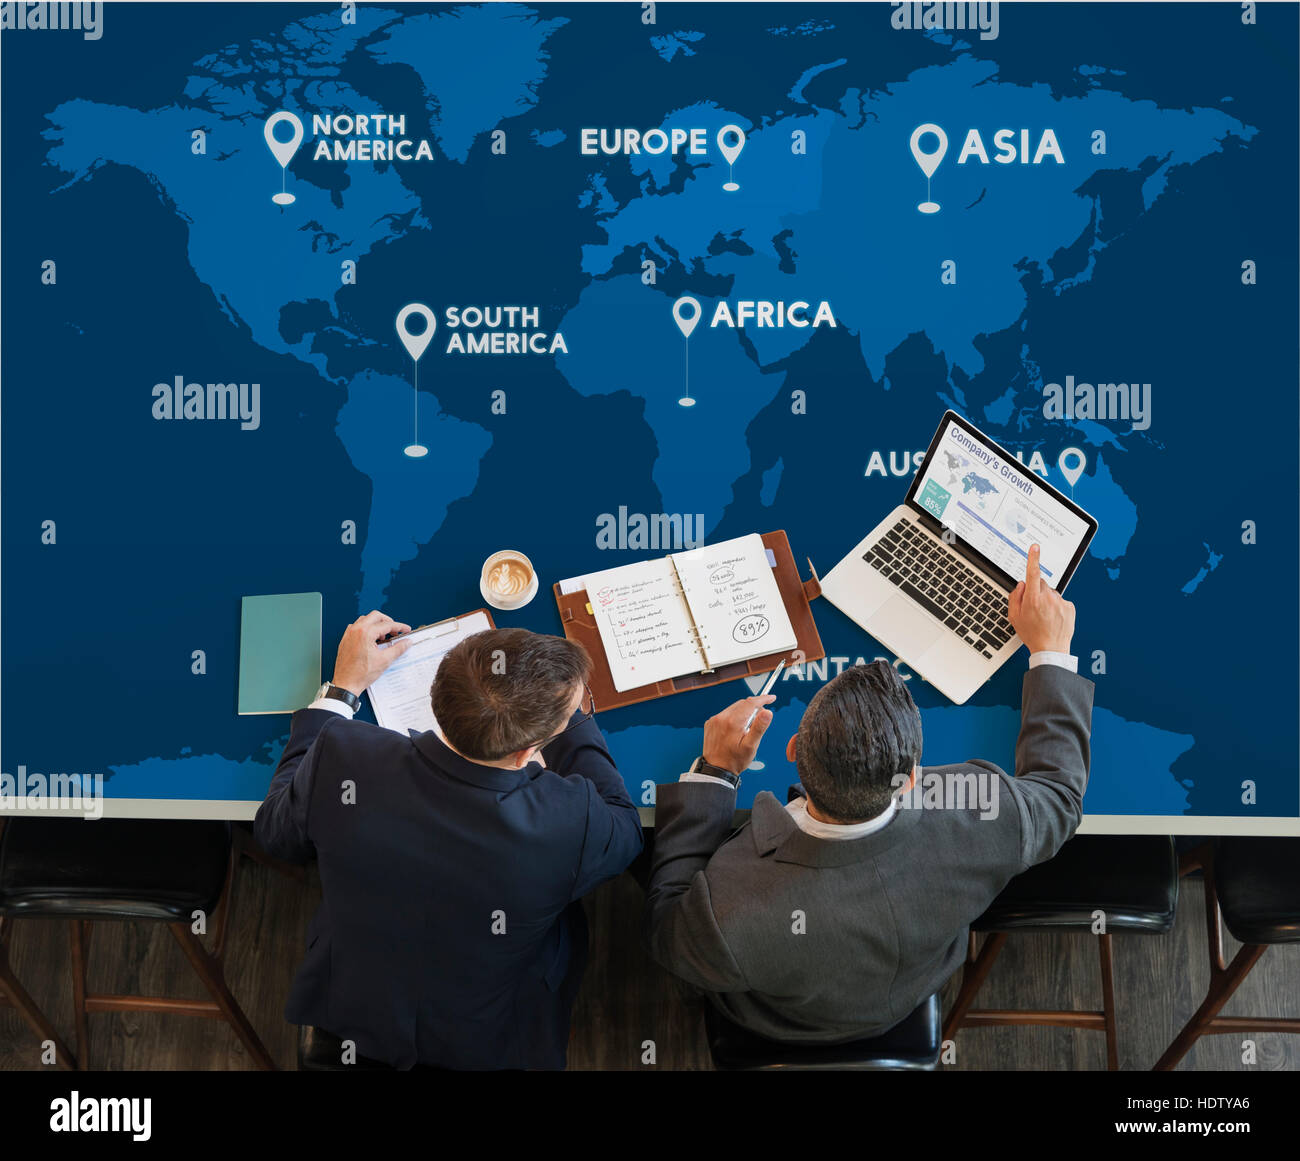 Global Business Map Destination Concept Stock Photo